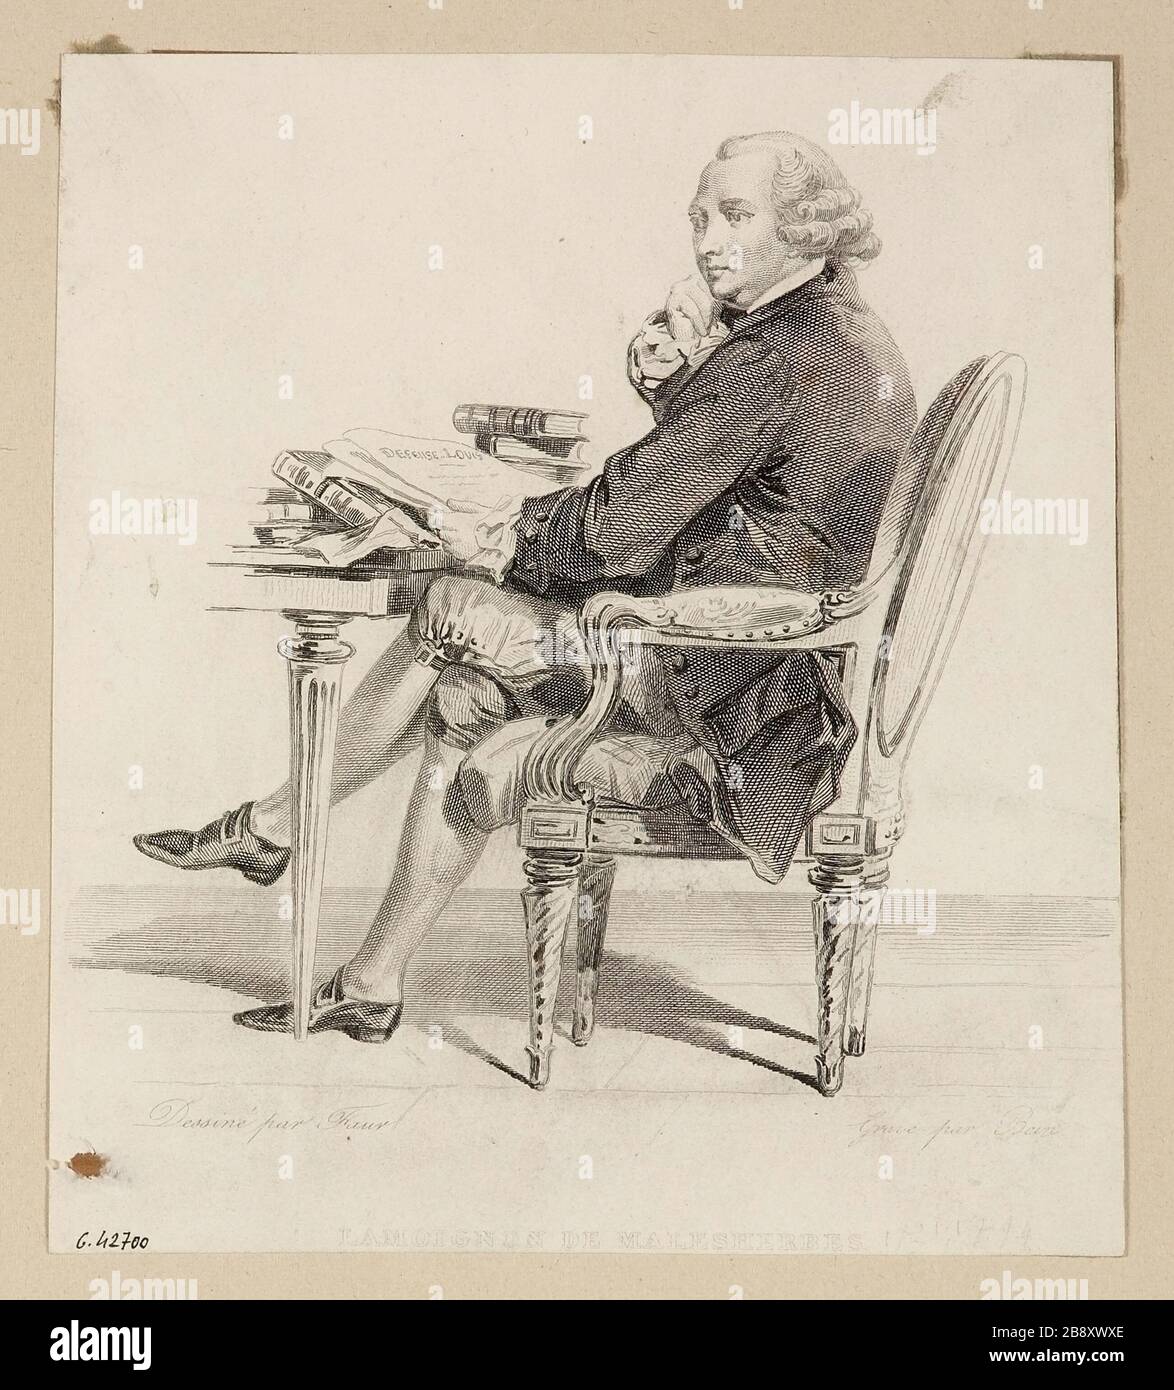 William Christian Lamoignon Malesherbes (1721-1794), magistrate, botanist and French statesman. Stock Photo